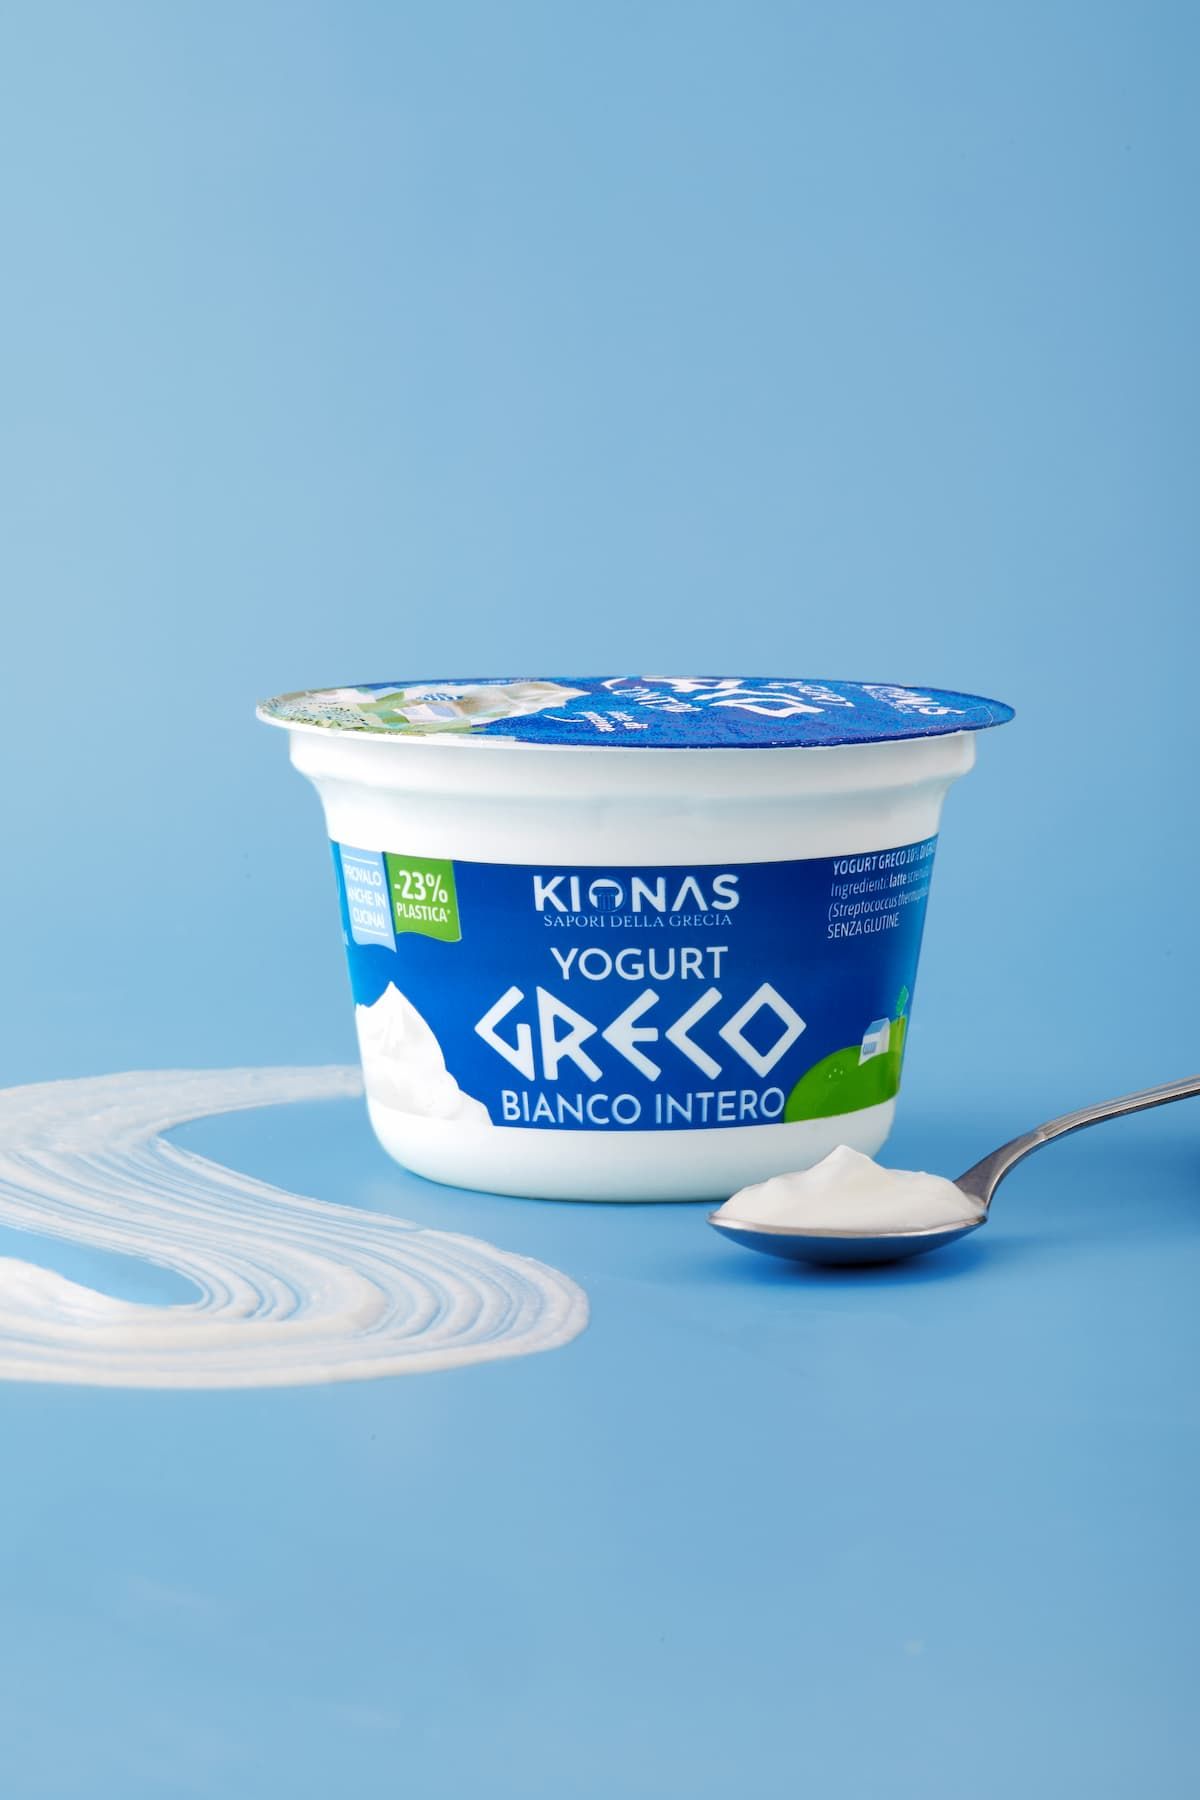 Yogurt Greco Bianco Intero